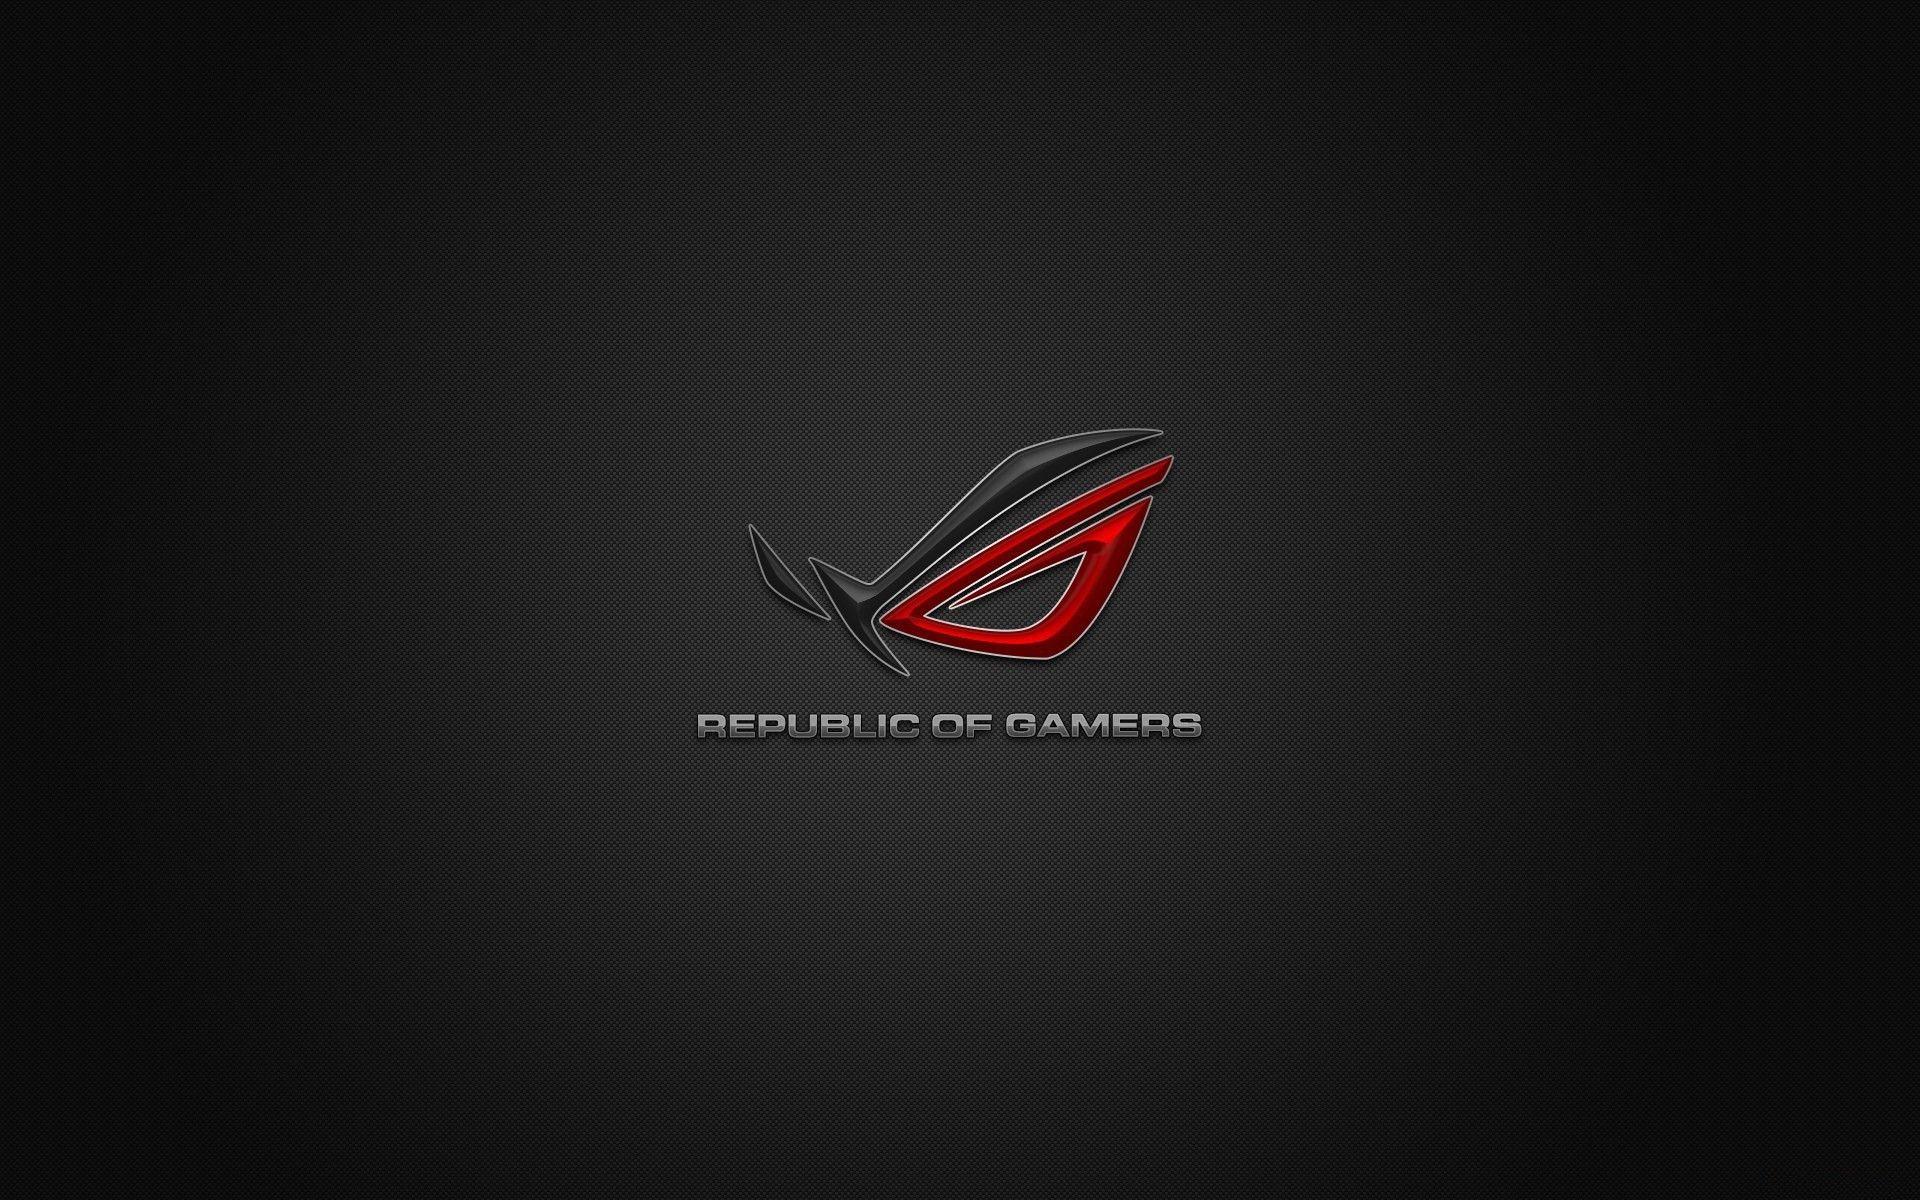 Asus logos republic of gamers windows logo wallpaper. AllWallpaper